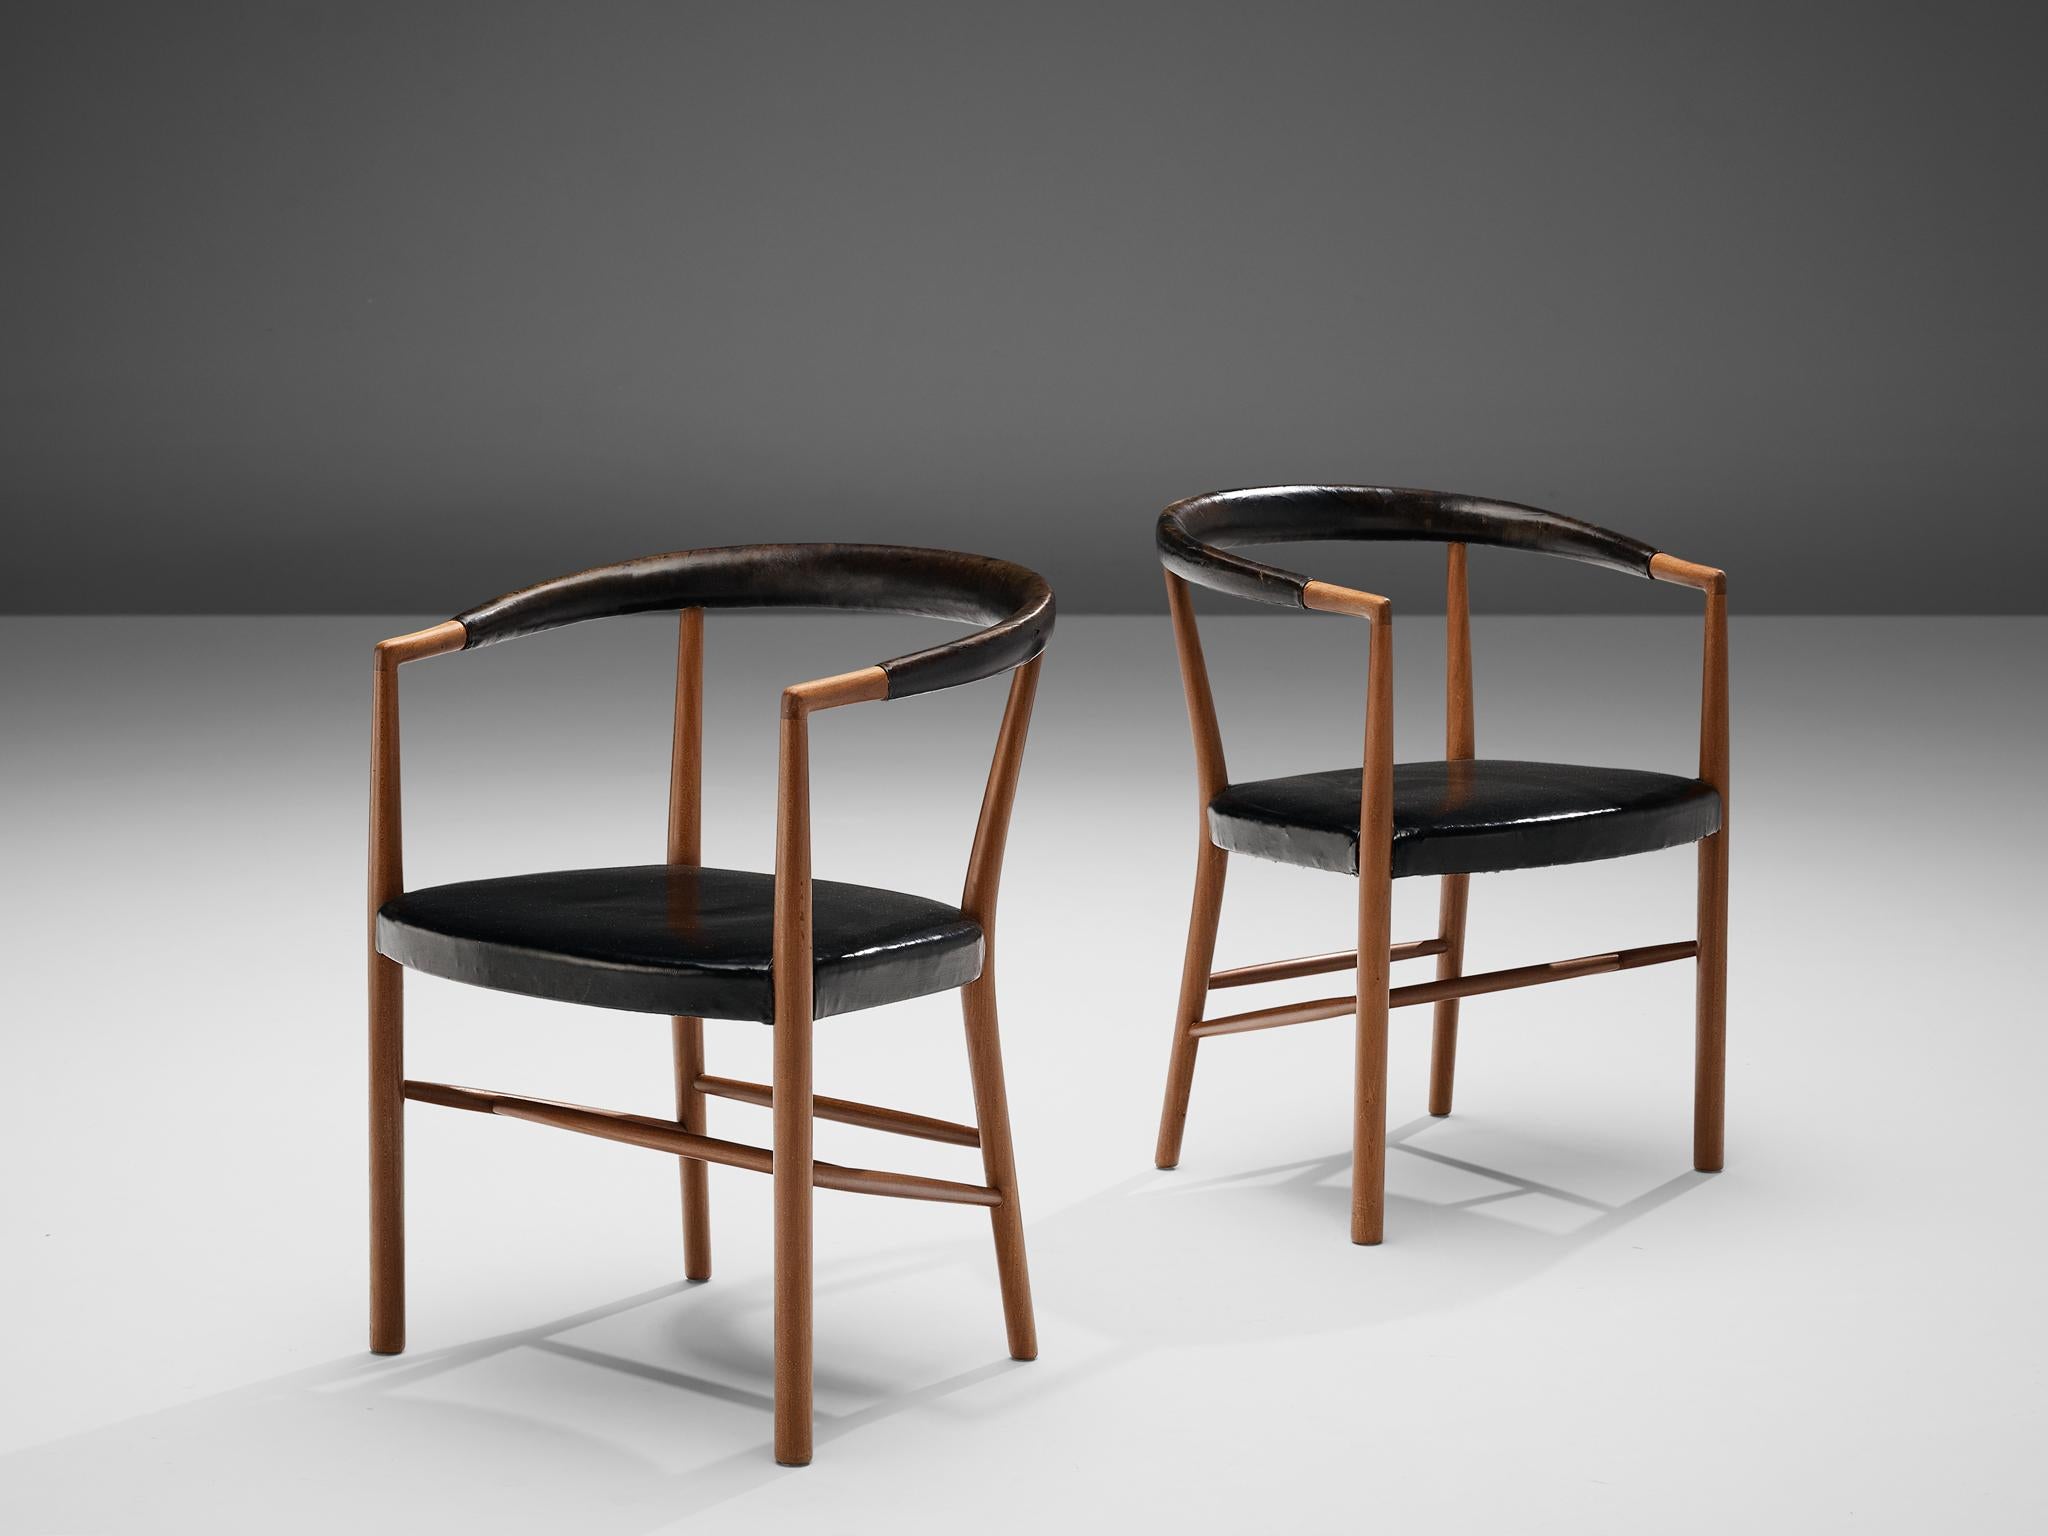 Jabob Kjær for Jacob Kjær Møbelhaandværk, 'UN' armchairs model 'B37', original black leather, mahogany, Denmark, design 1949, manufactured 1957

Stunning pair of 'UN' chairs by Jacob Kjær manufactured in 1957. The Danish designer Jacob Kjær was